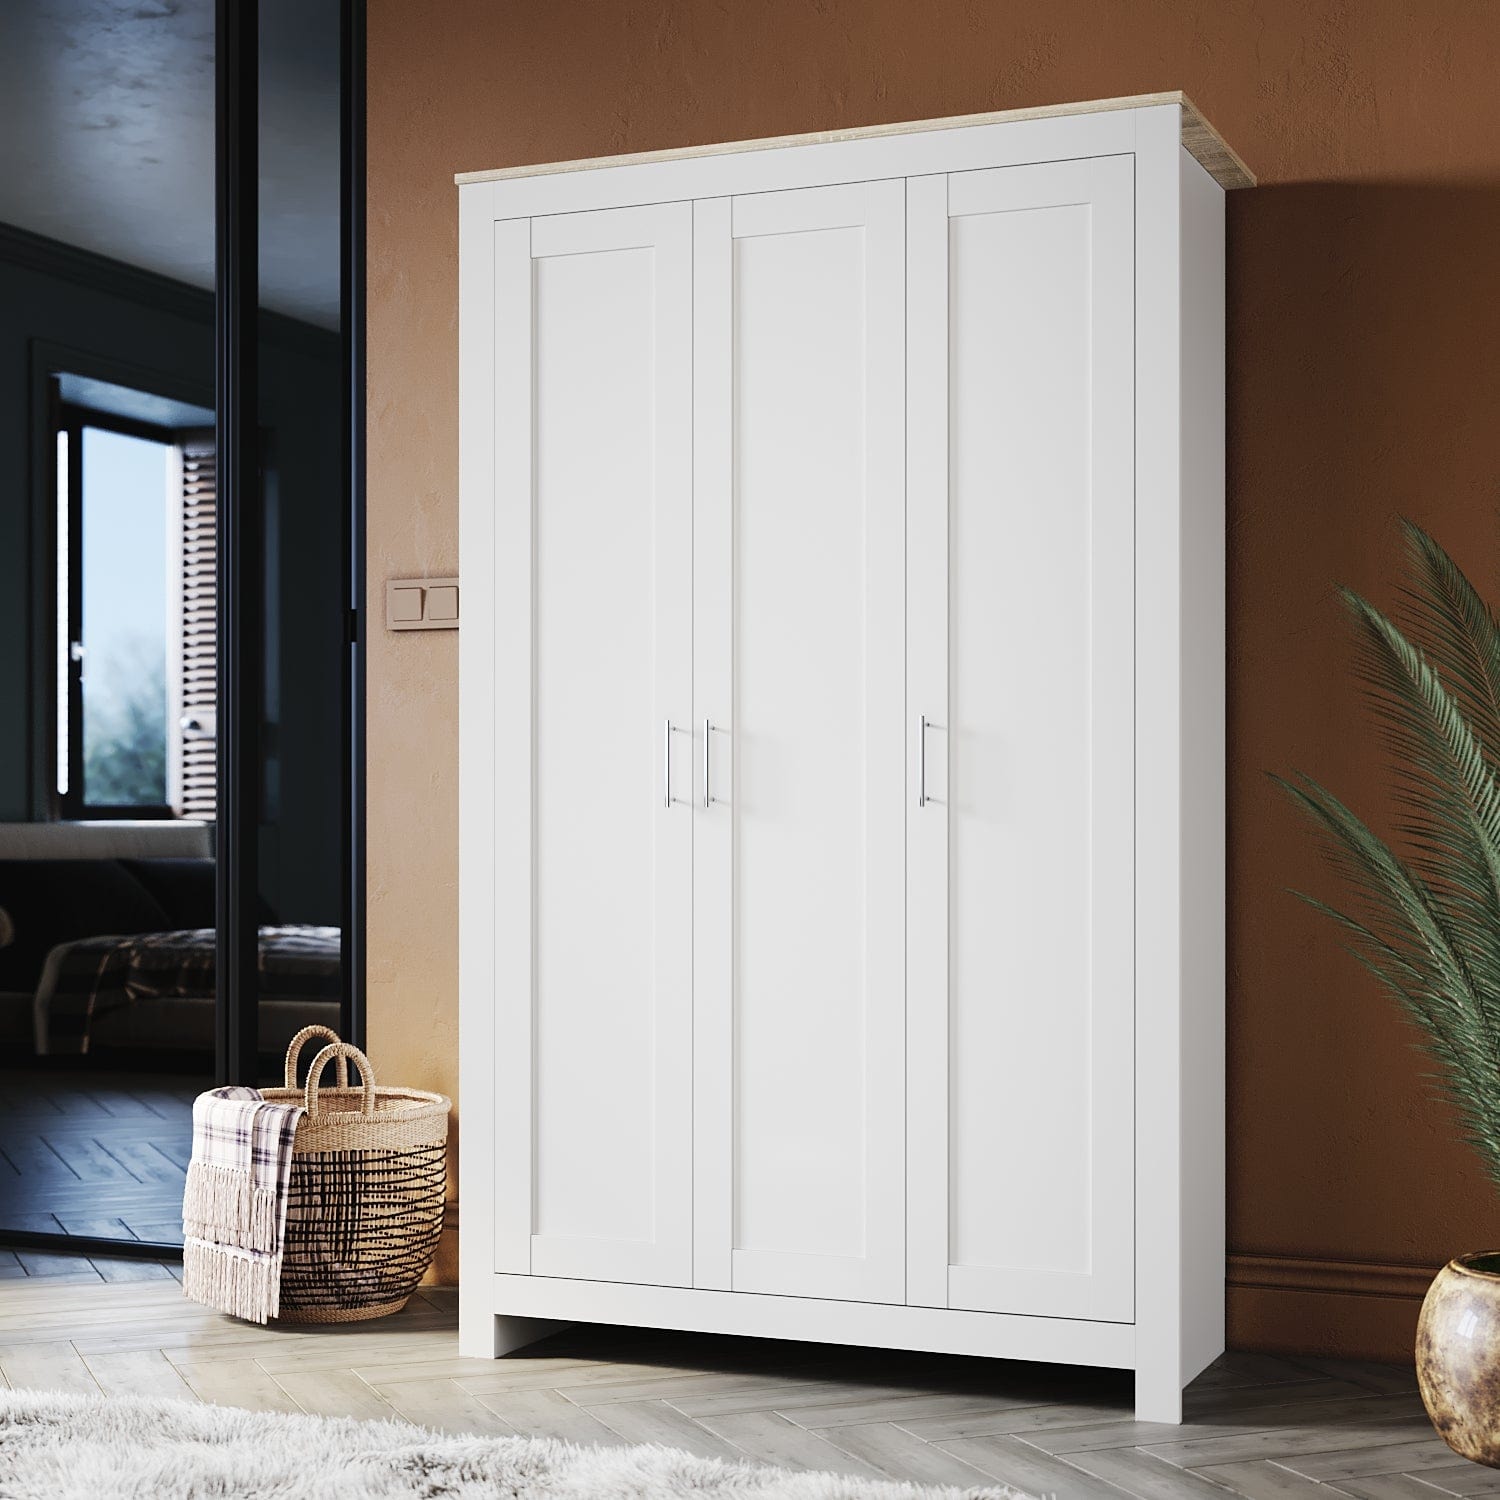 180cm Simple Design Wooden Storage Cabinet Large Grey Wardrobe with 3 Doors - Elegantshowers